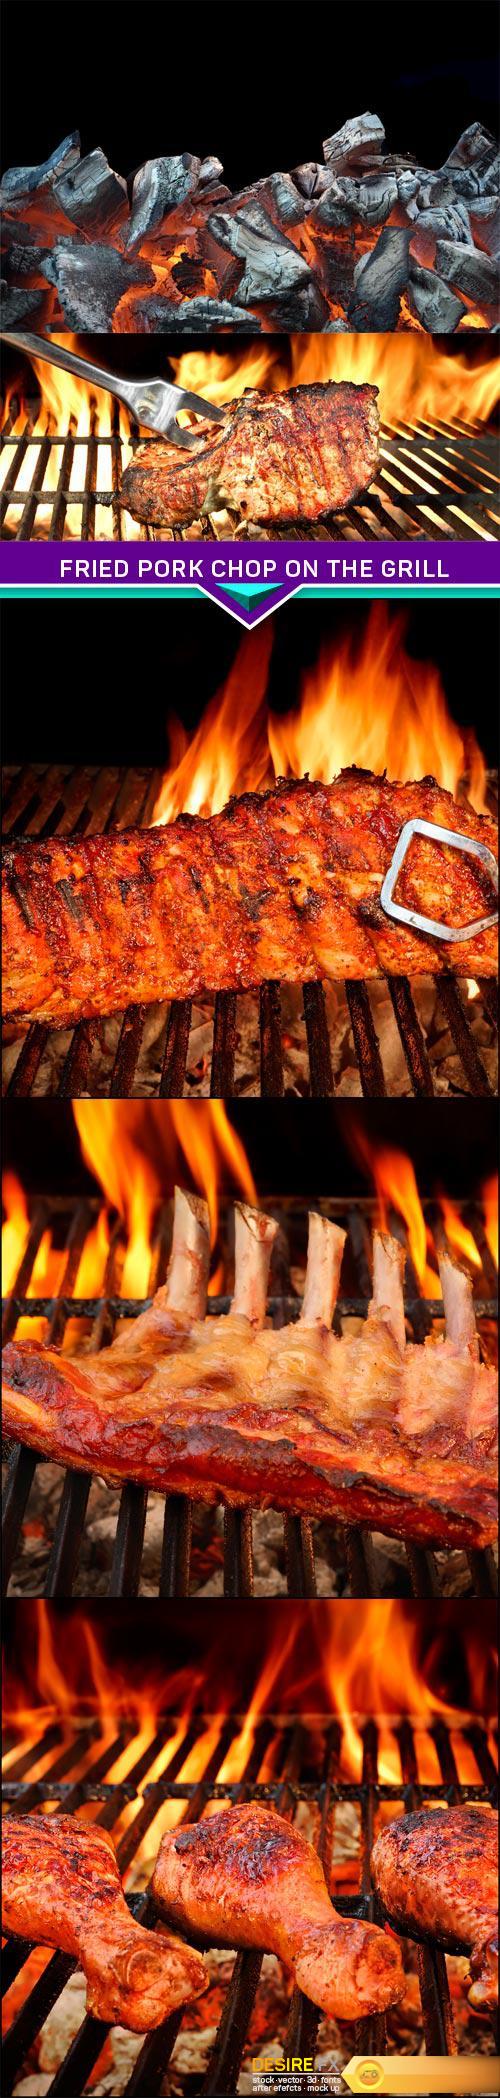 Fried pork chop on the grill 5x JPEG